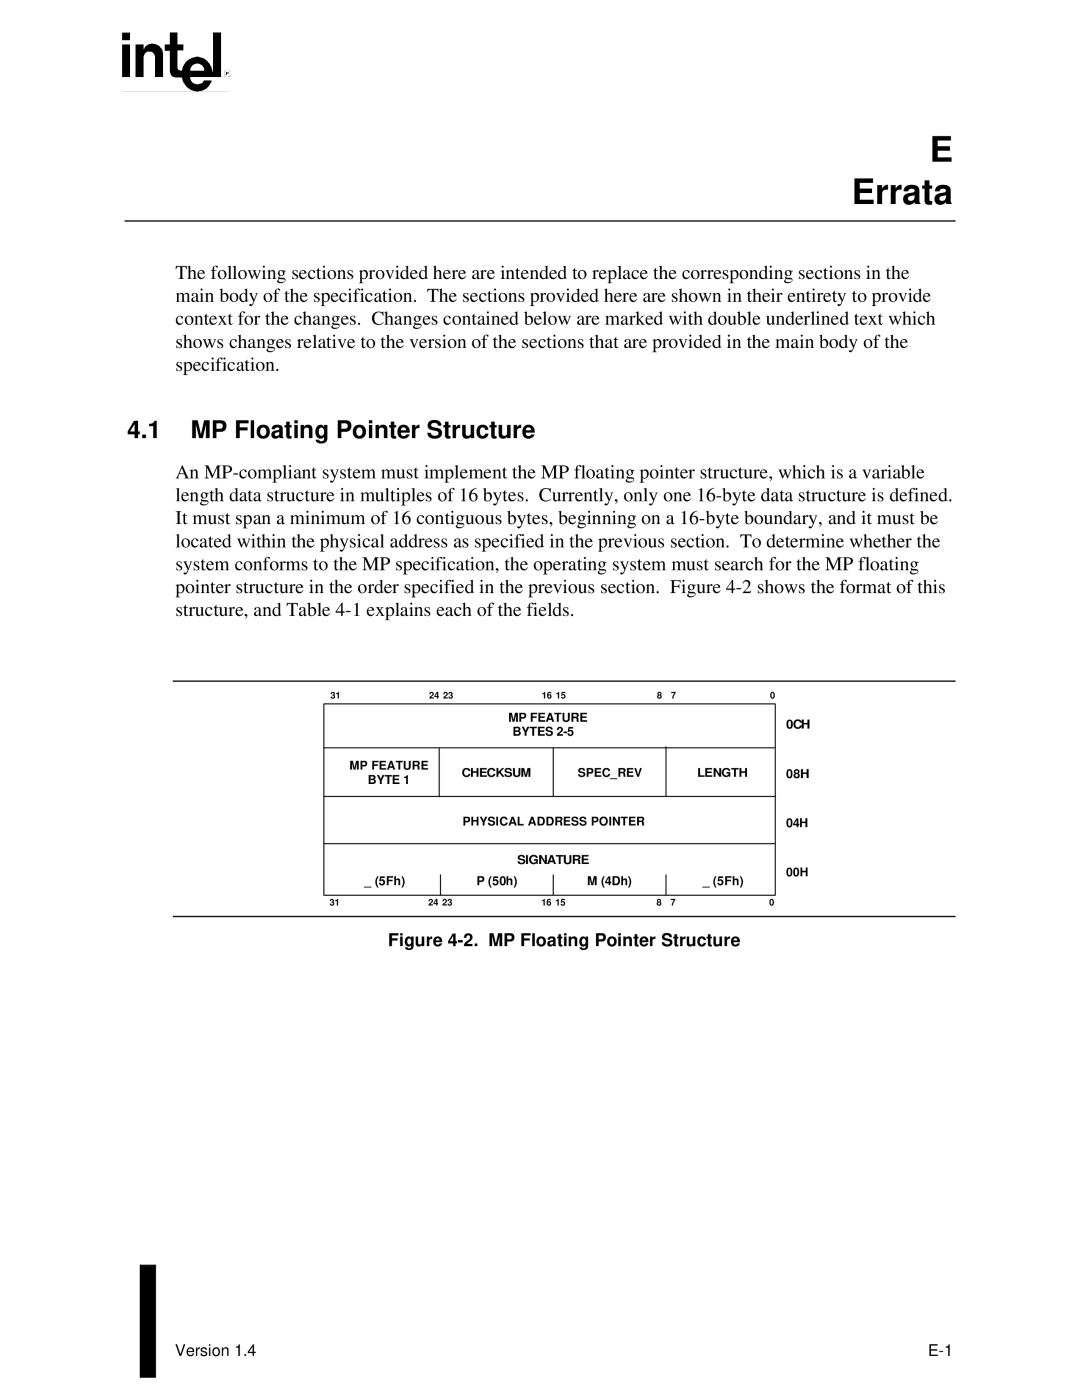 Intel MultiProcessor manual E Errata, Version 